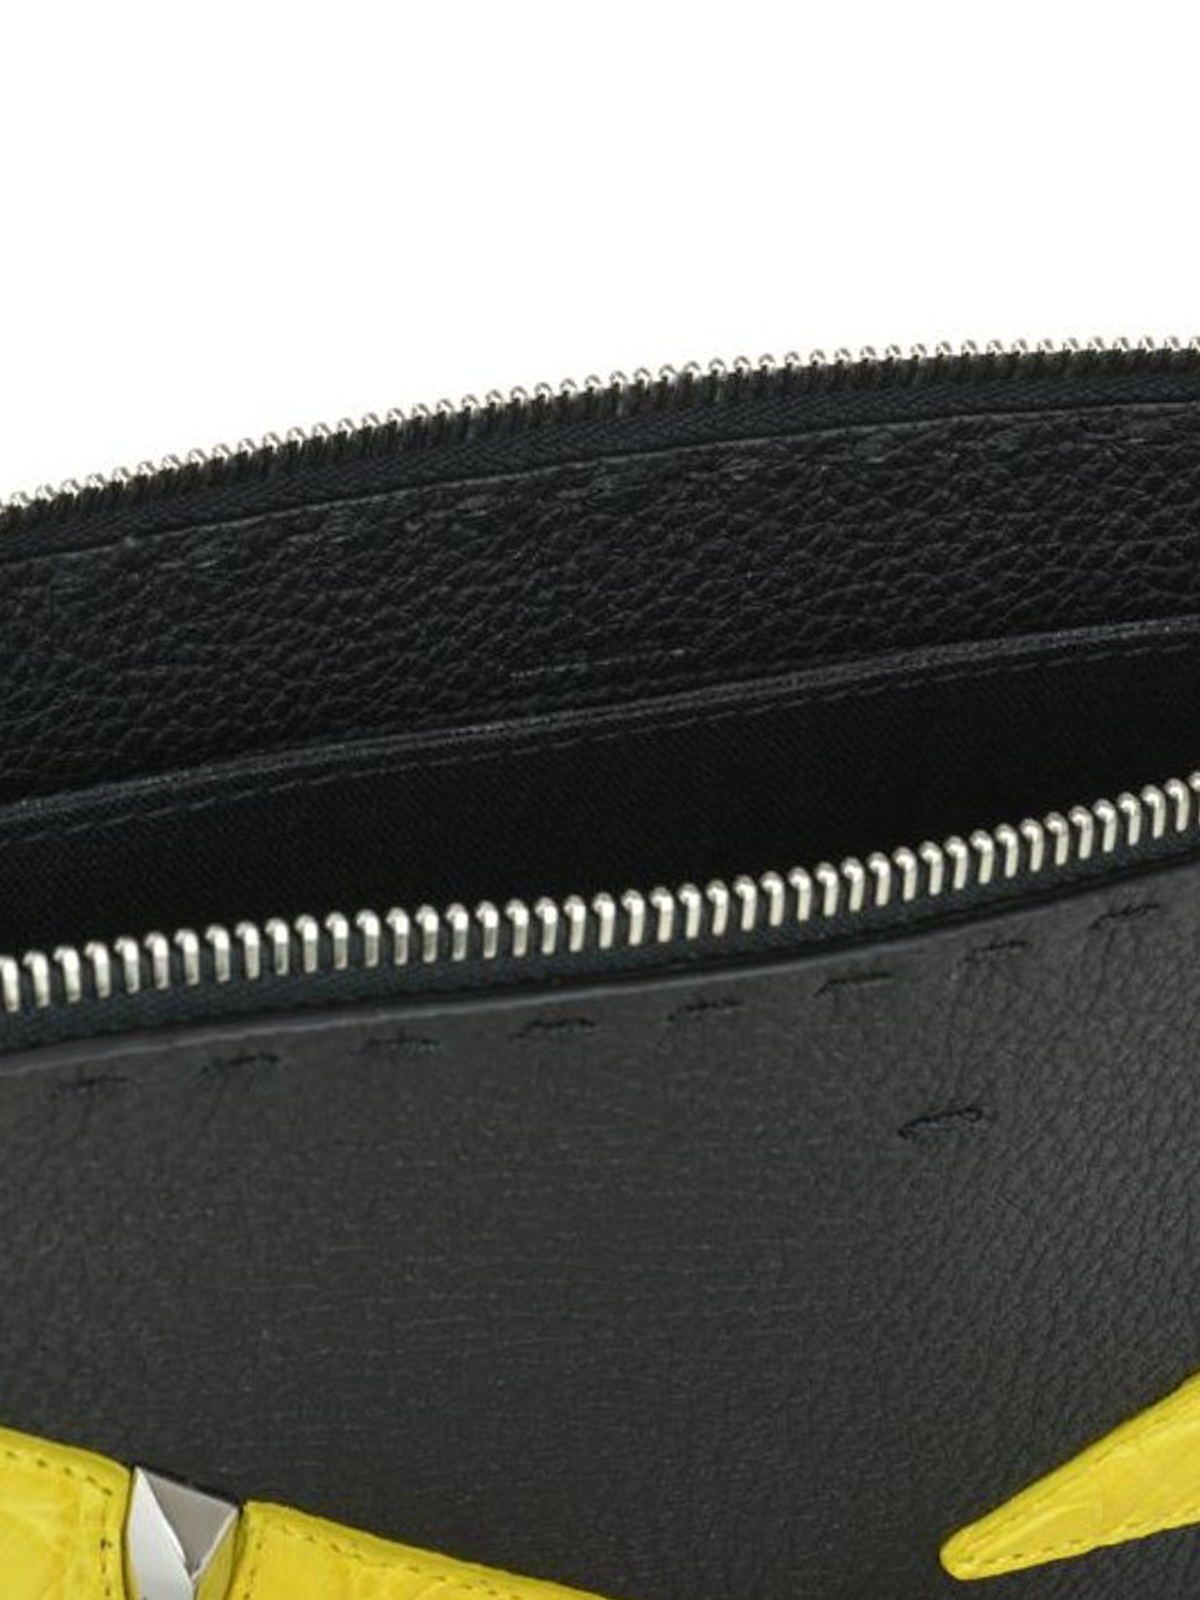 Clutches Fendi - Bag Bugs black hammered leather clutch - 7VA350A3DLF0R2A